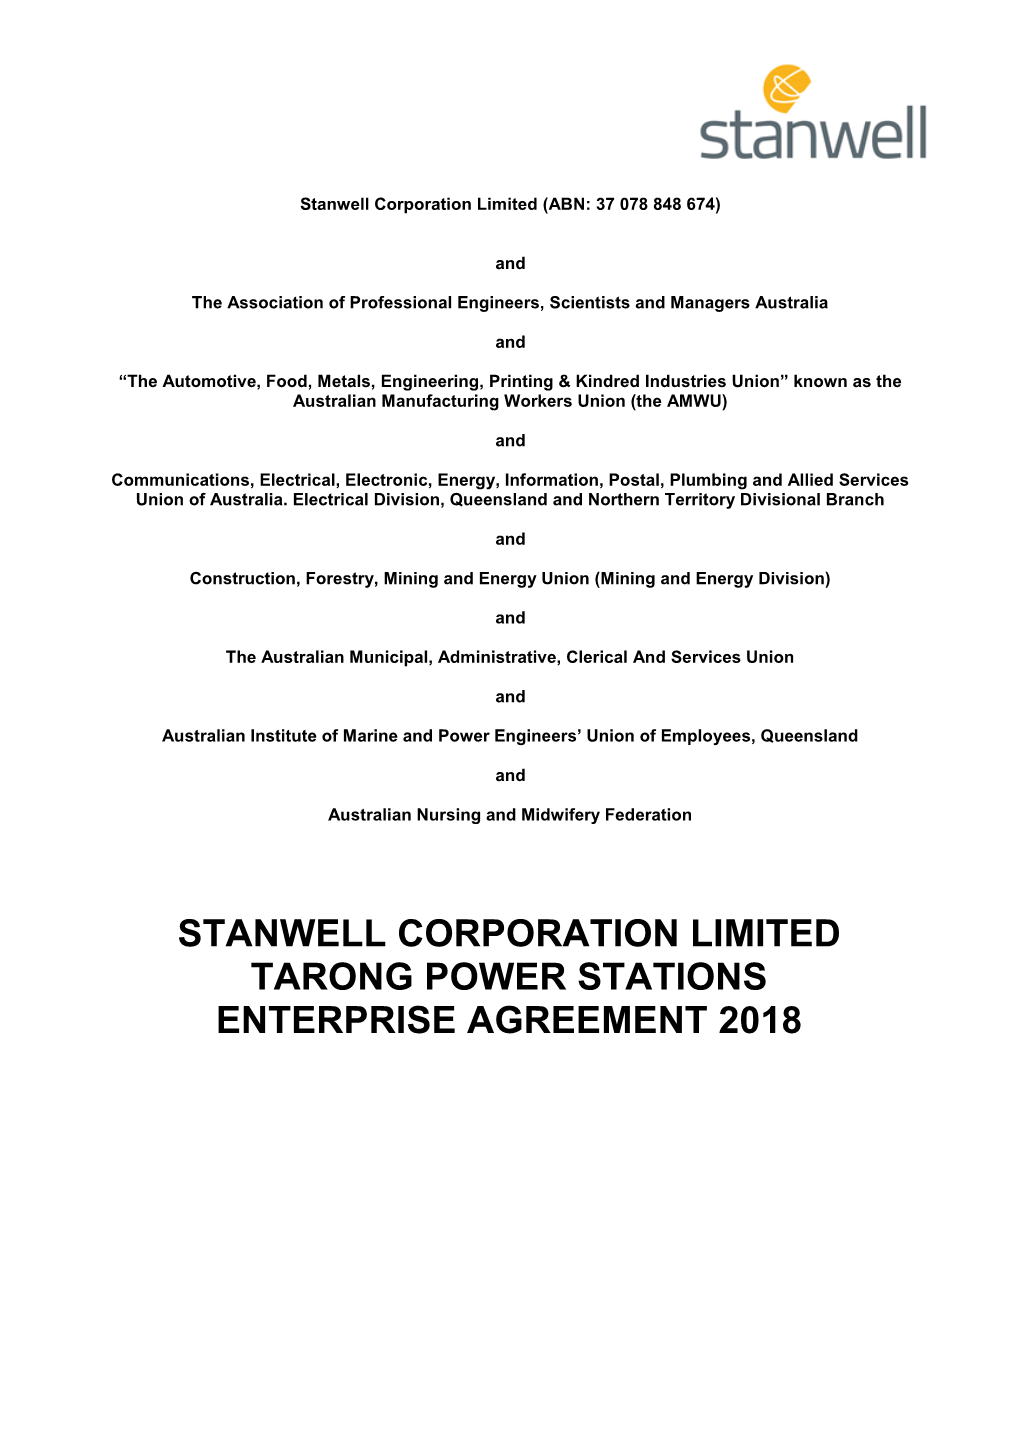 Tarong Power Stations Enterprise Agreement 2018